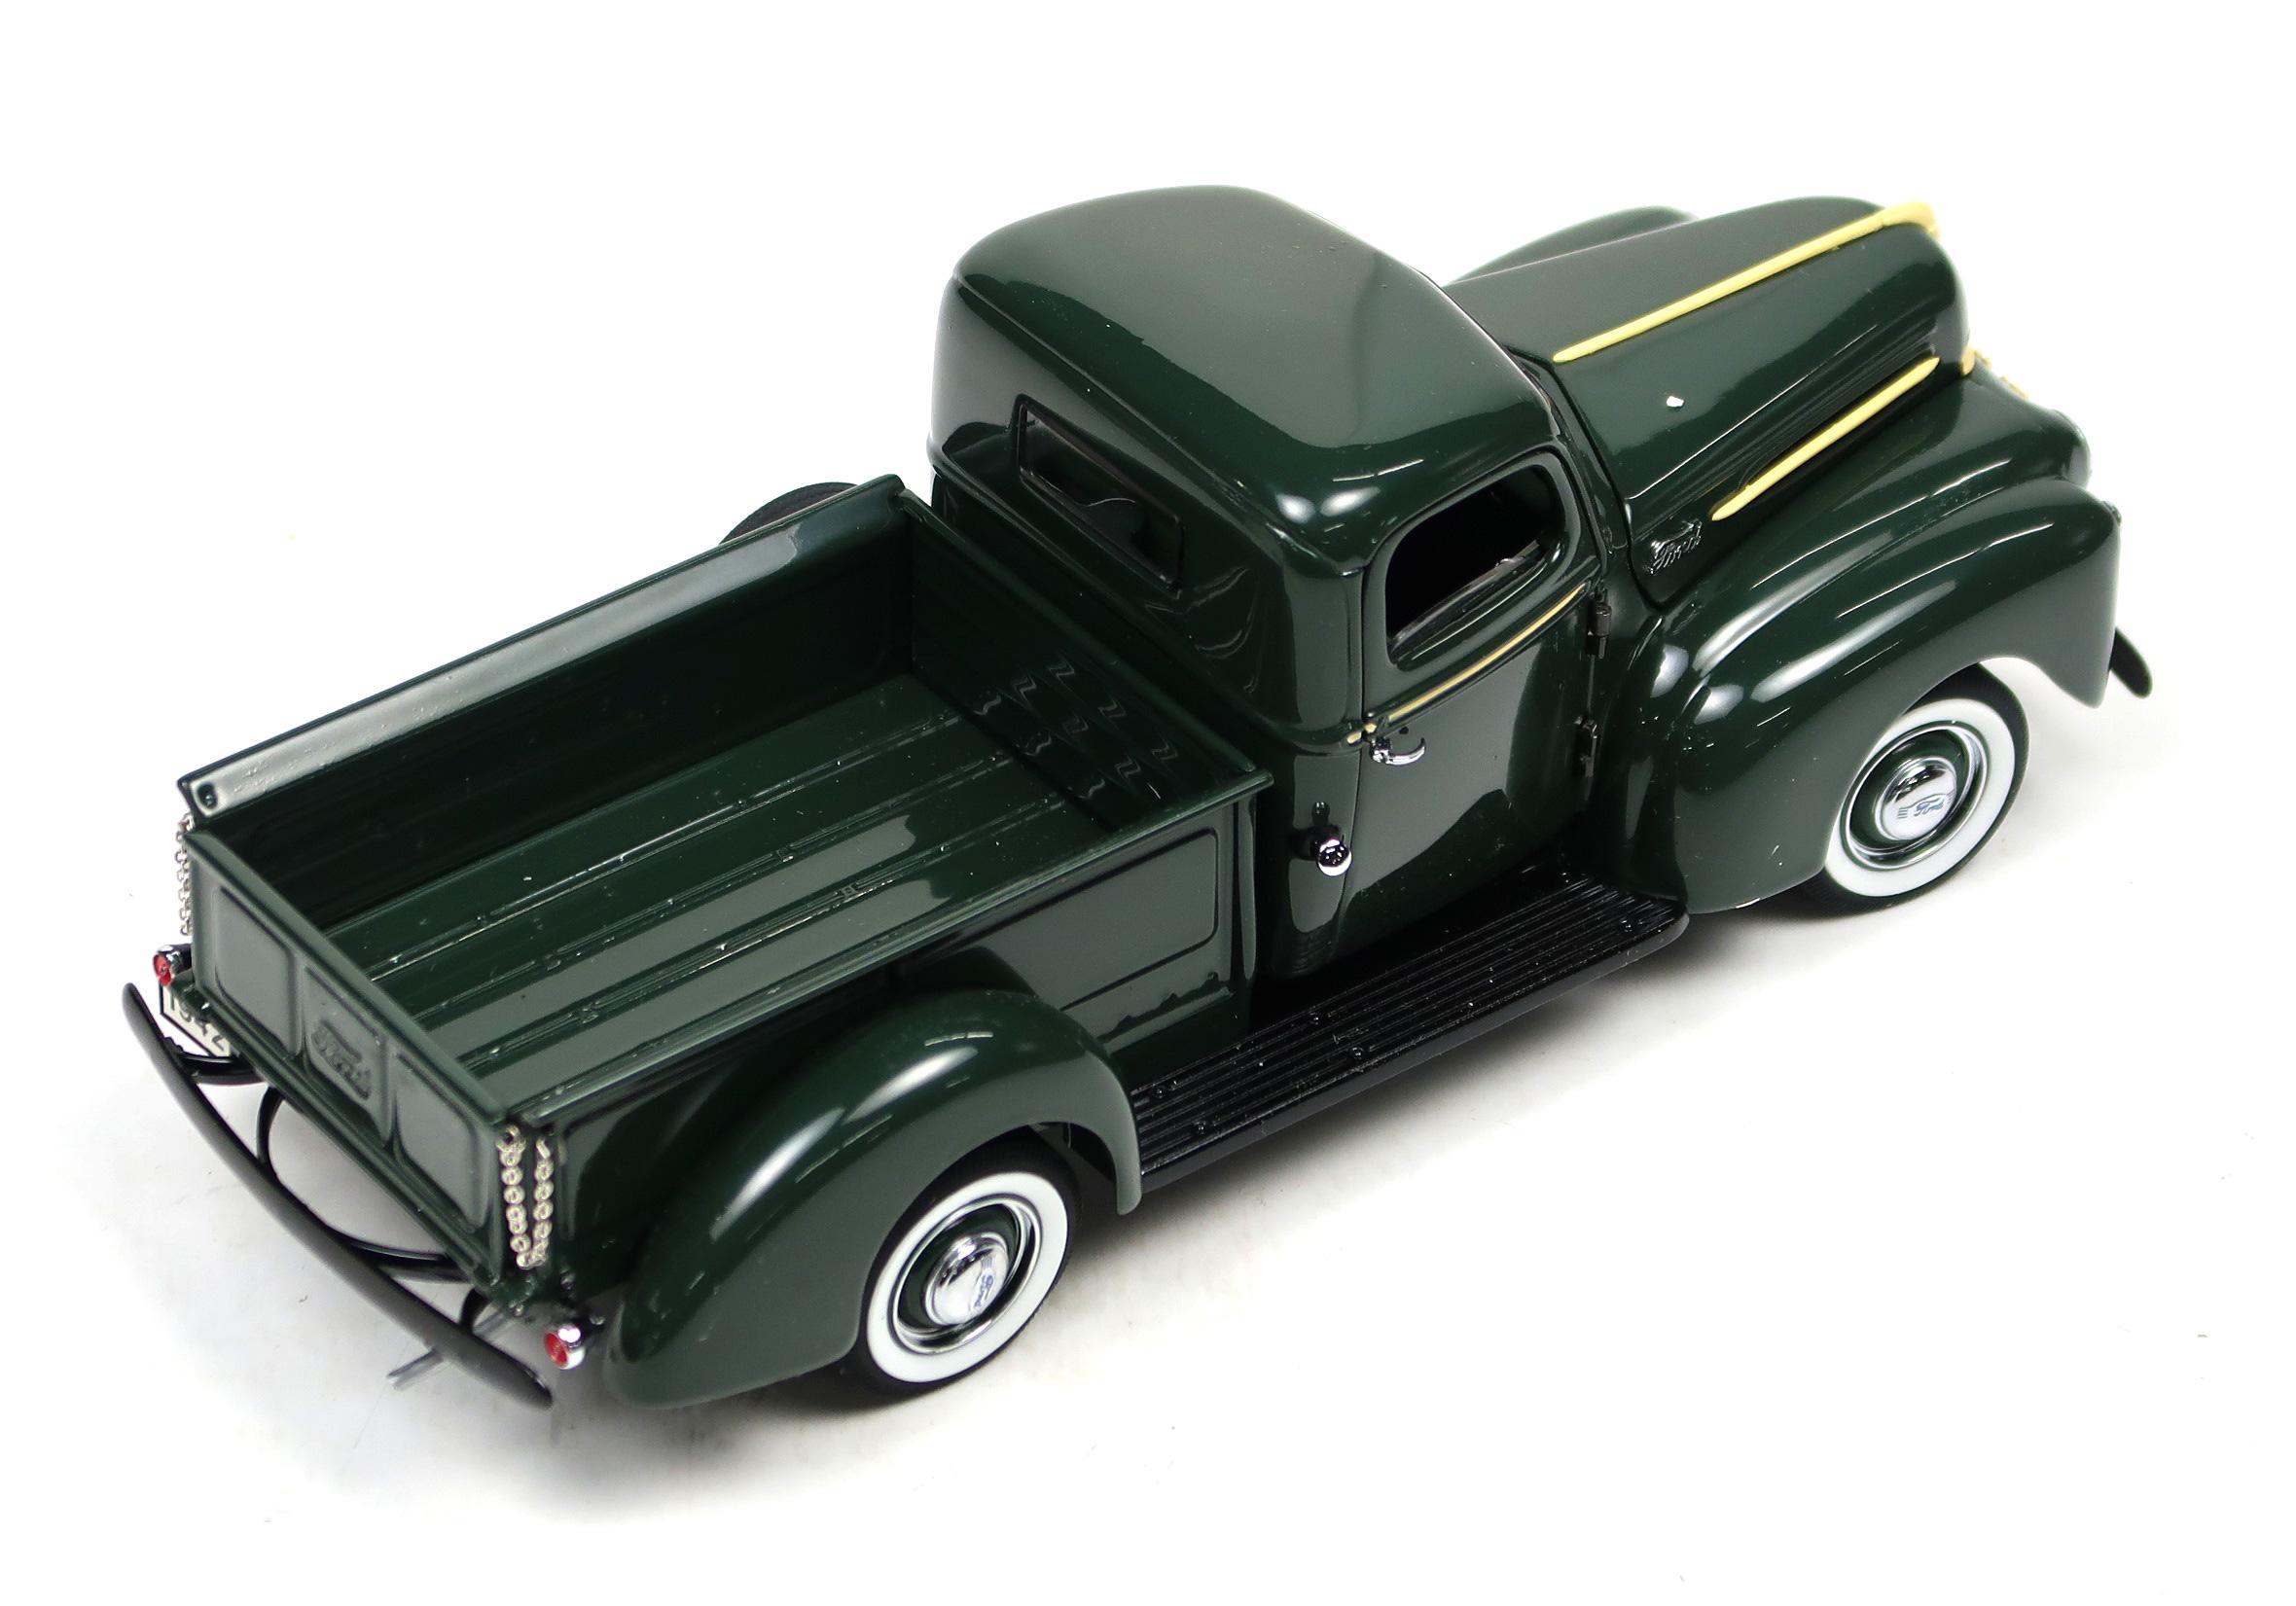 Toy Scale Model, Replica 1942 Ford Pickup, New In Box, 13" L.